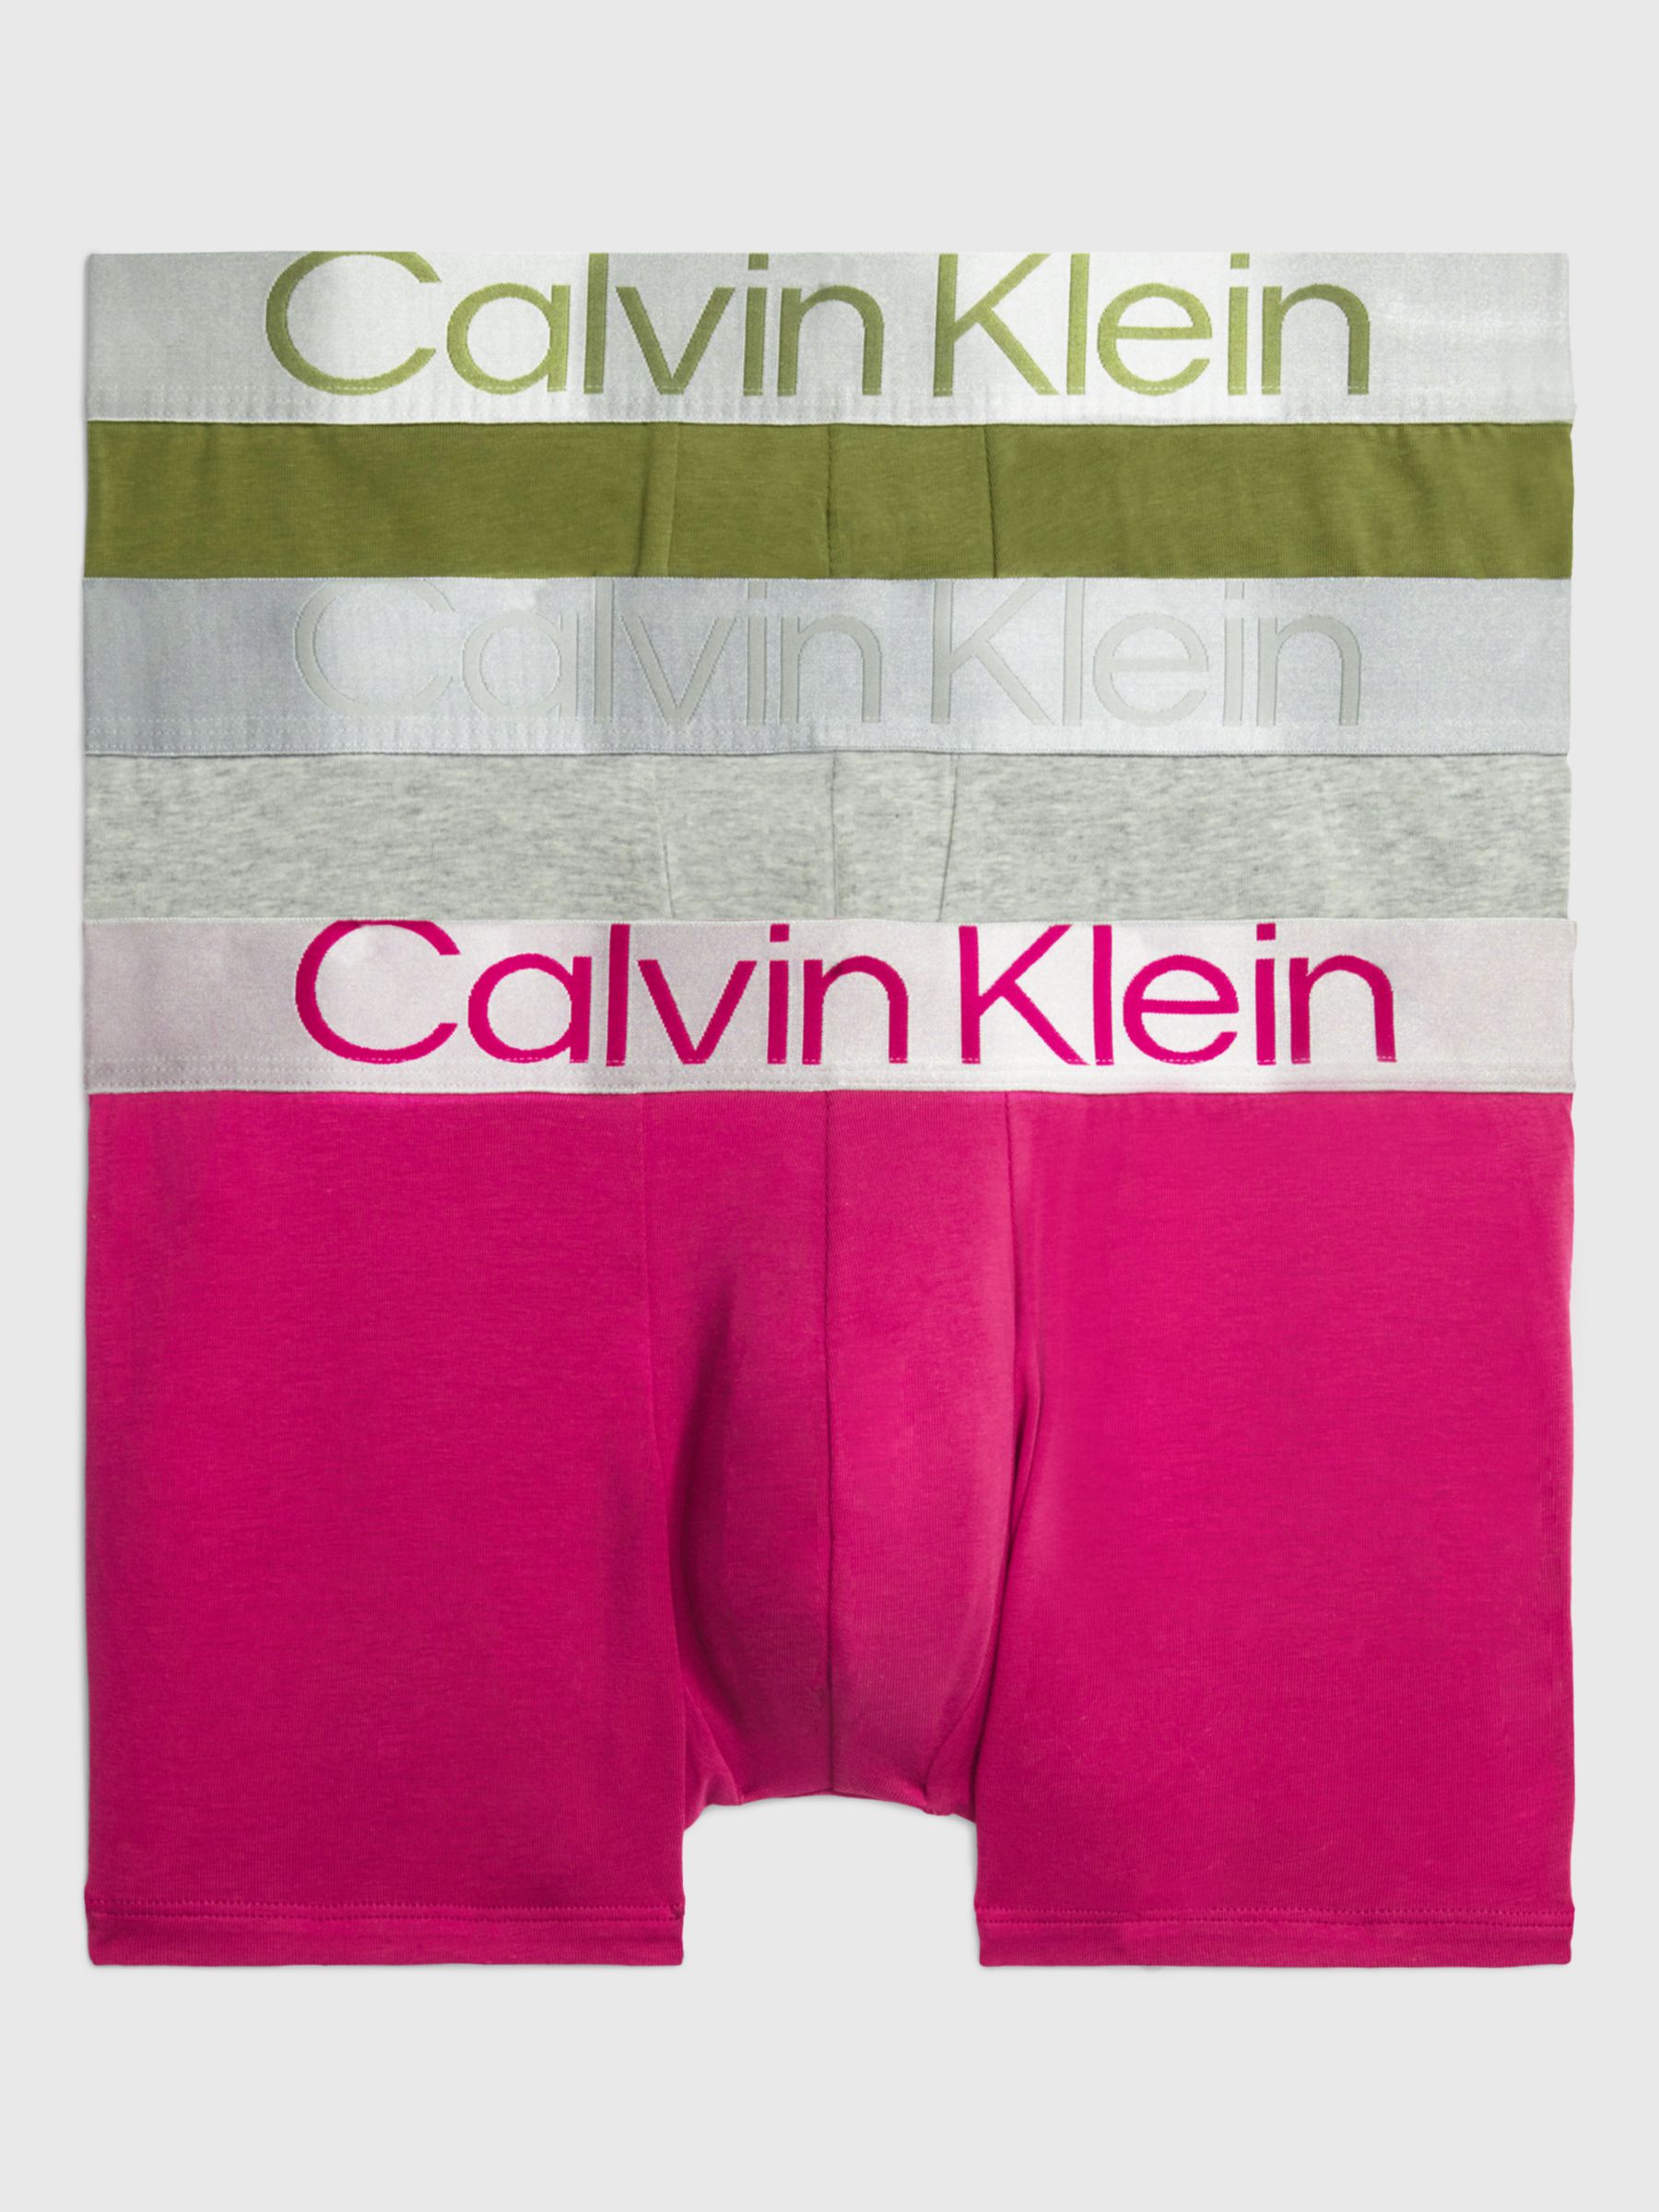 Calvin Klein Steel Cotton Trunks, Pack of 3, Multi, M